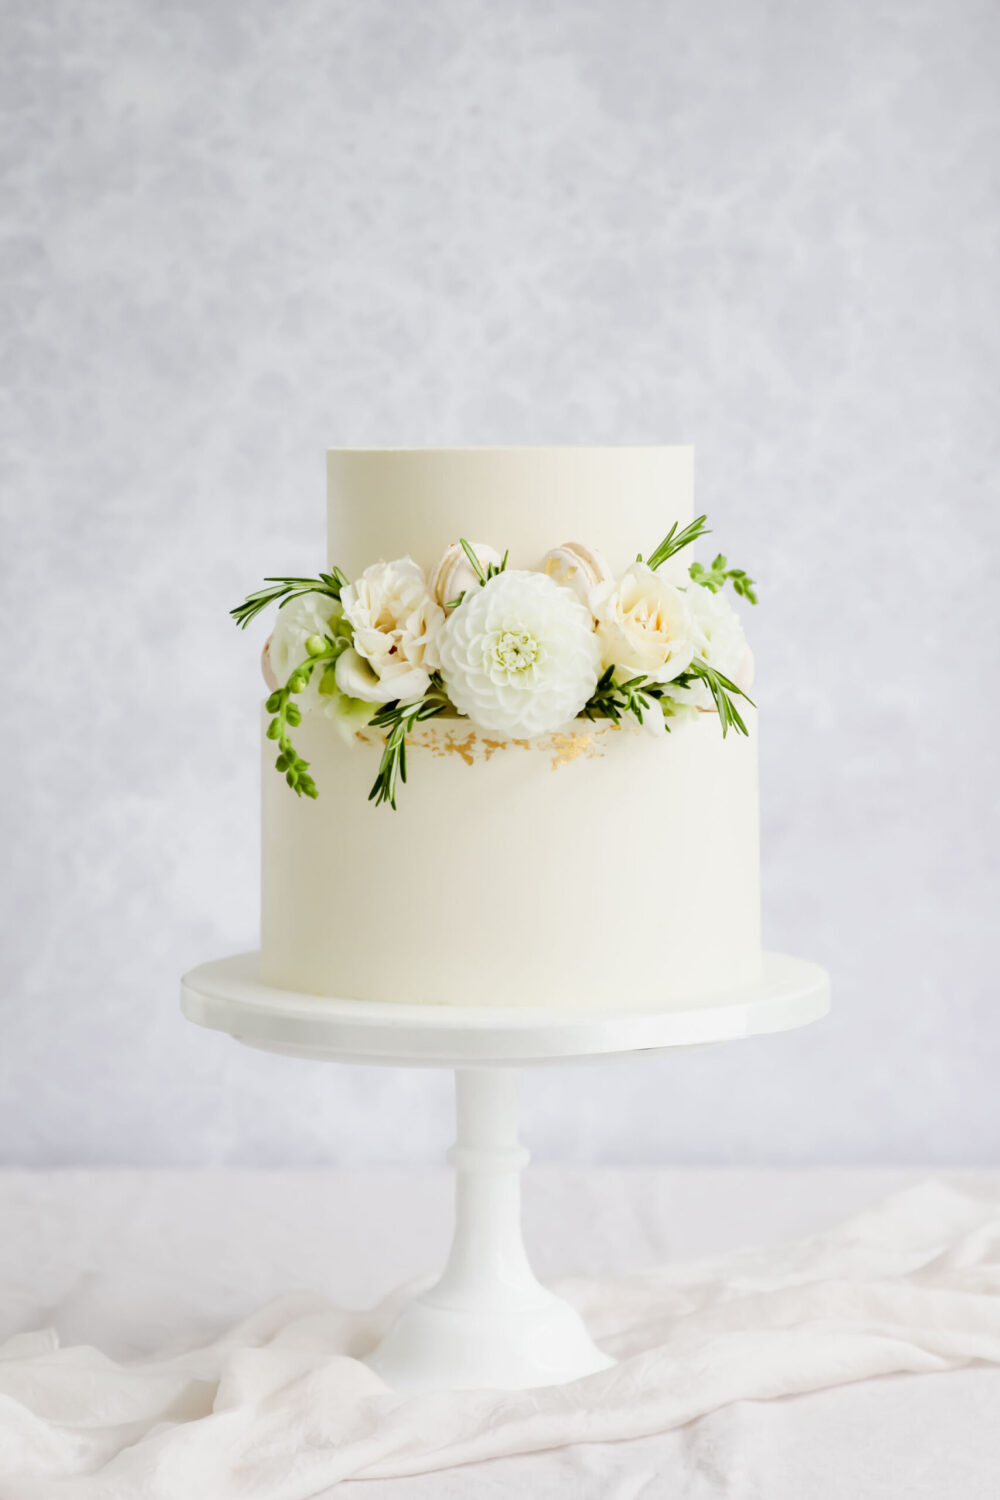 cheap wedding cakes ideas Archives - Wedding World @ Happyinvitation.com